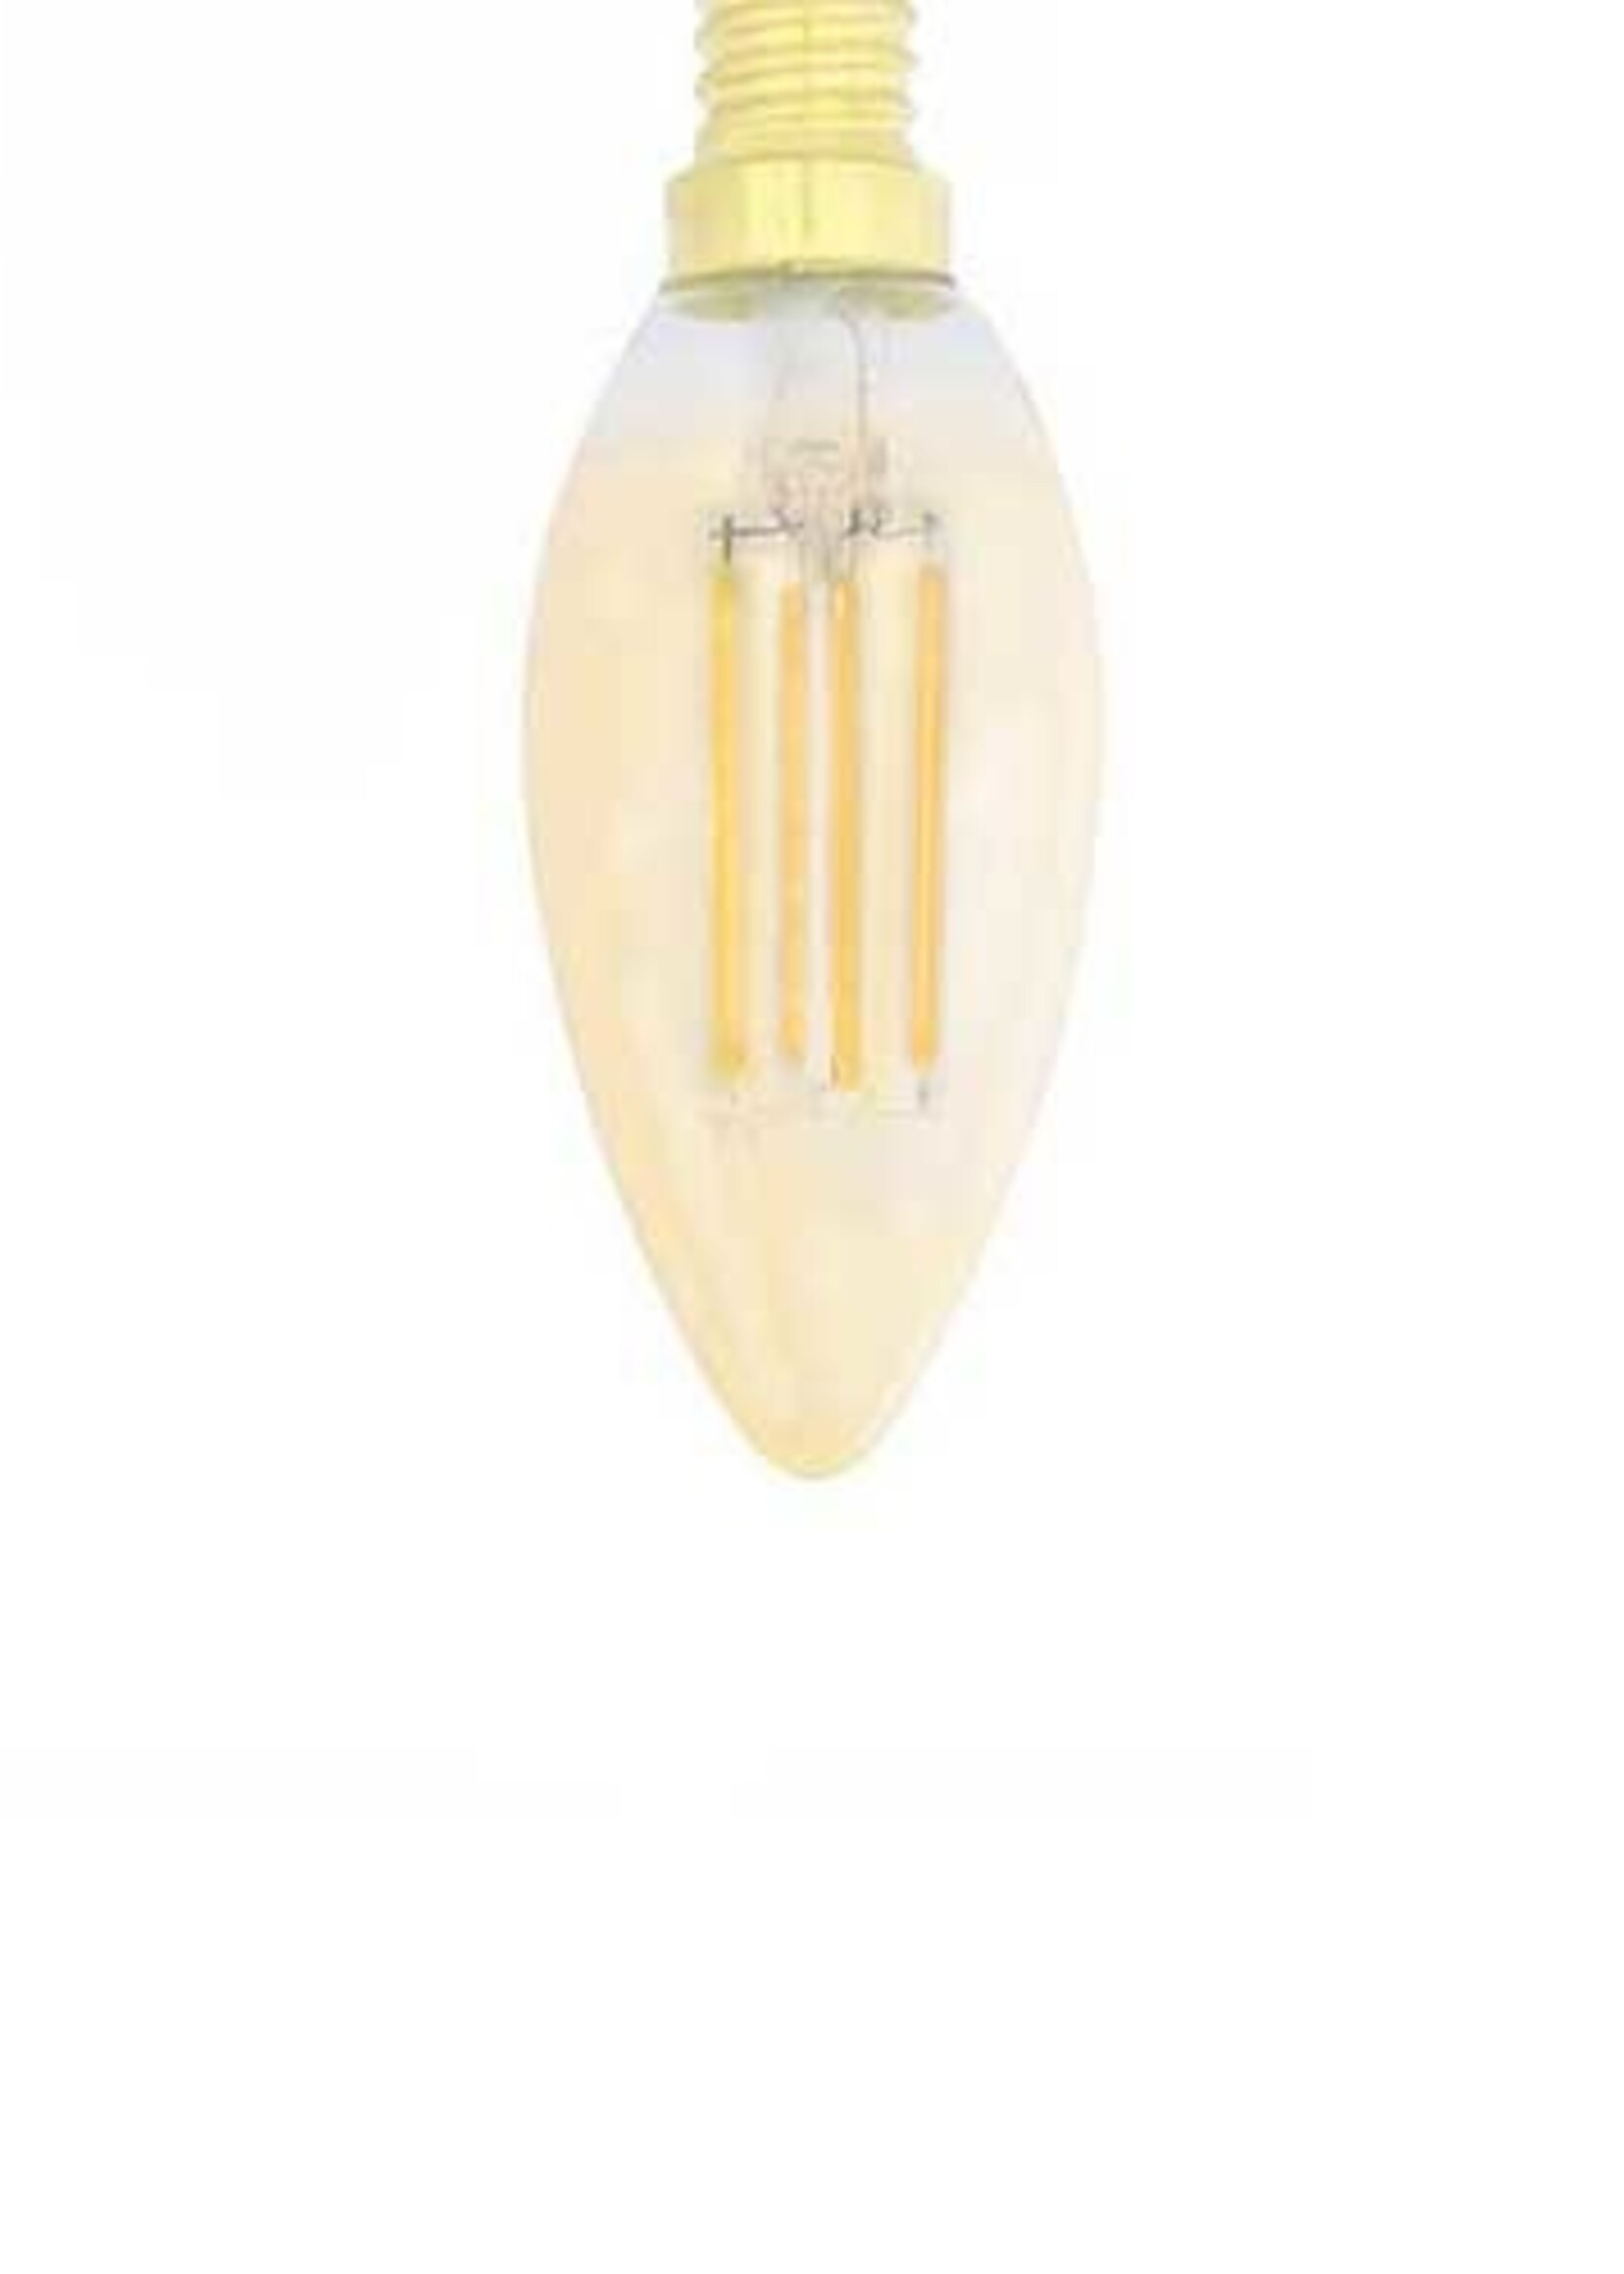 LEDWINKEL-Online E14 LED Lamp filament C35 Candle 5W 2200K extra warm white dimmable